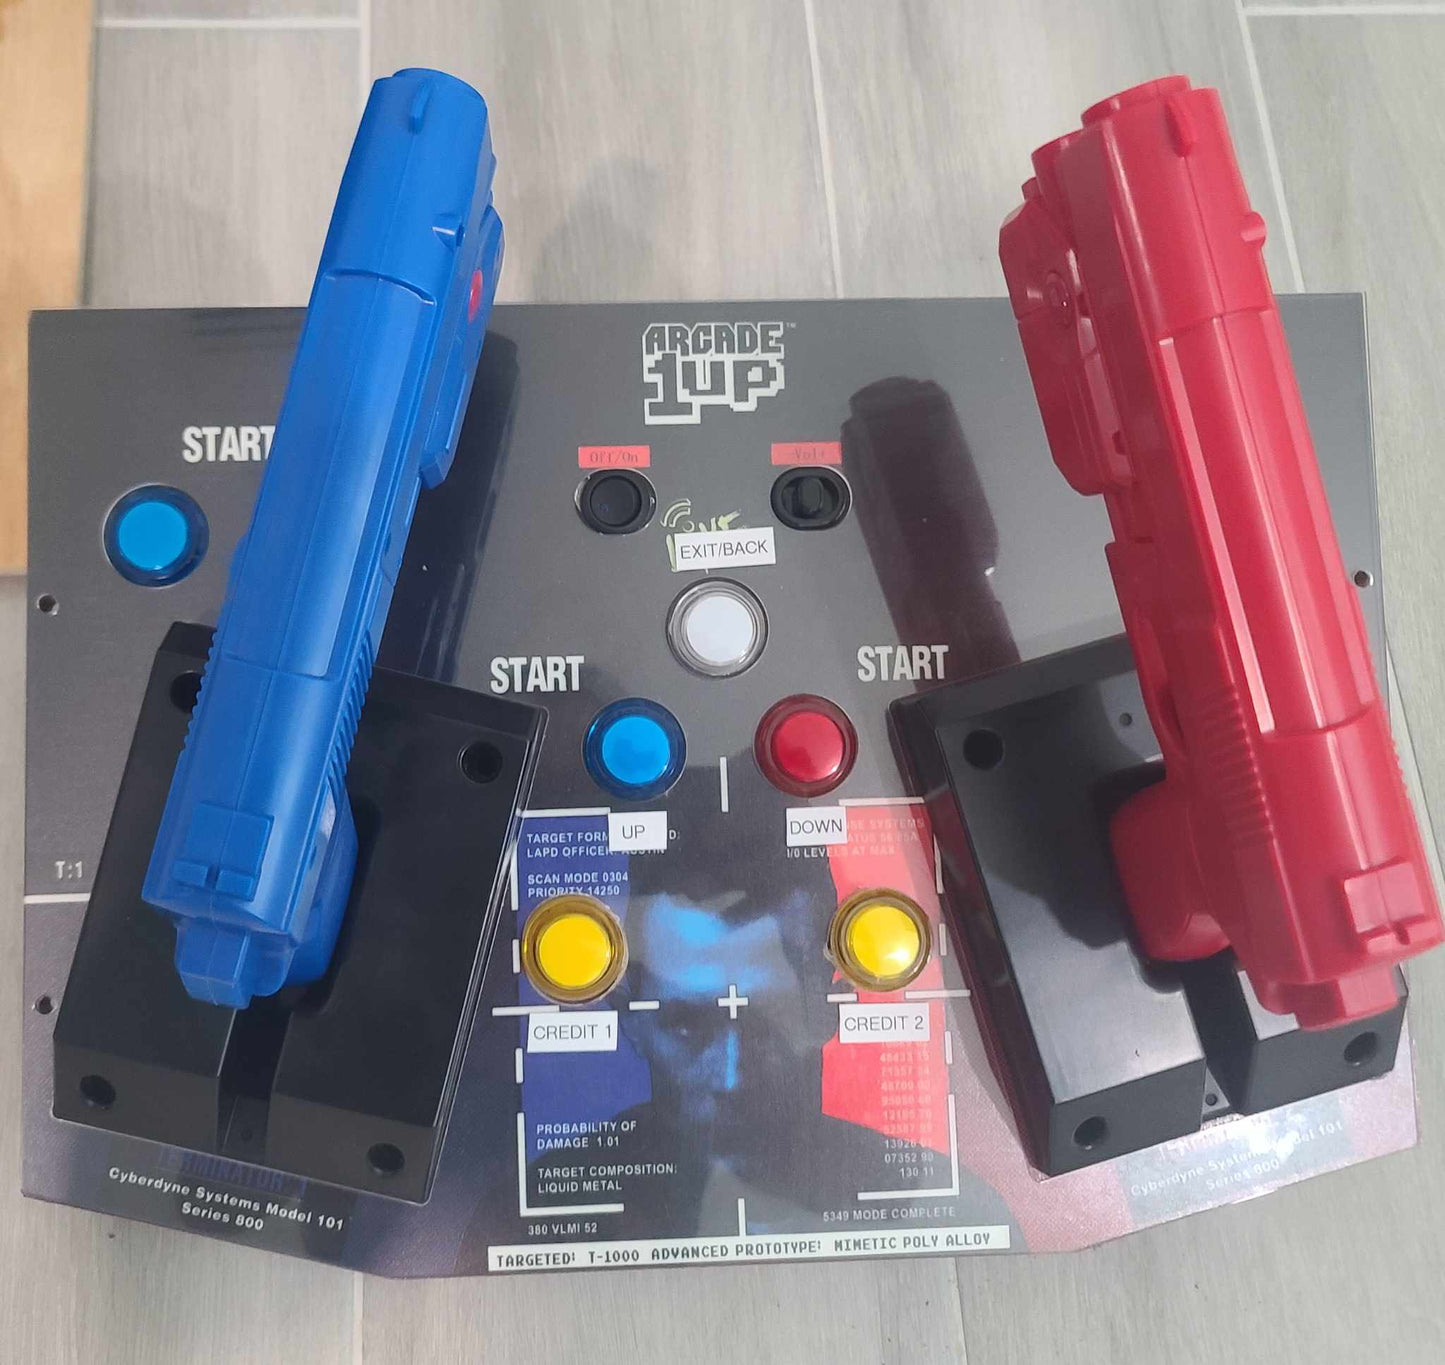 Terminator Arcade 1up  Light Gun Mod Kit